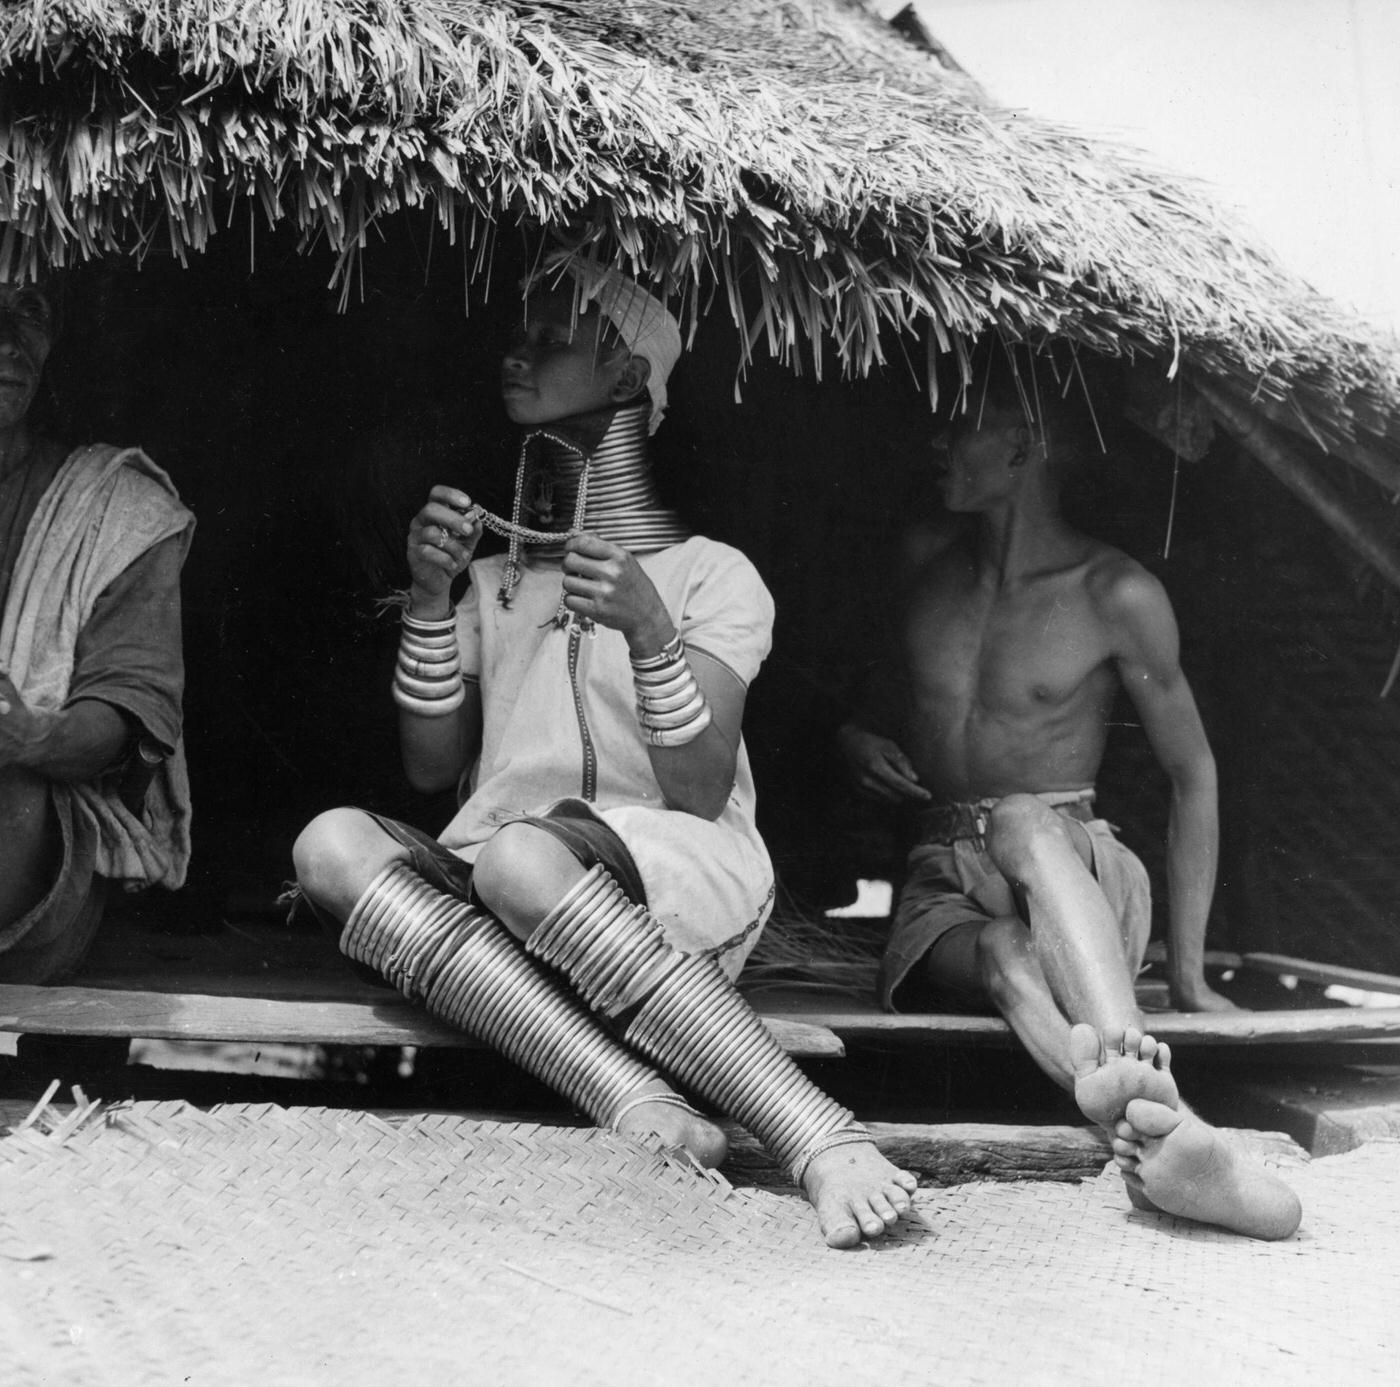 Group of Padaung, or Kayan people, sitting in a hut, Burma, 1950.